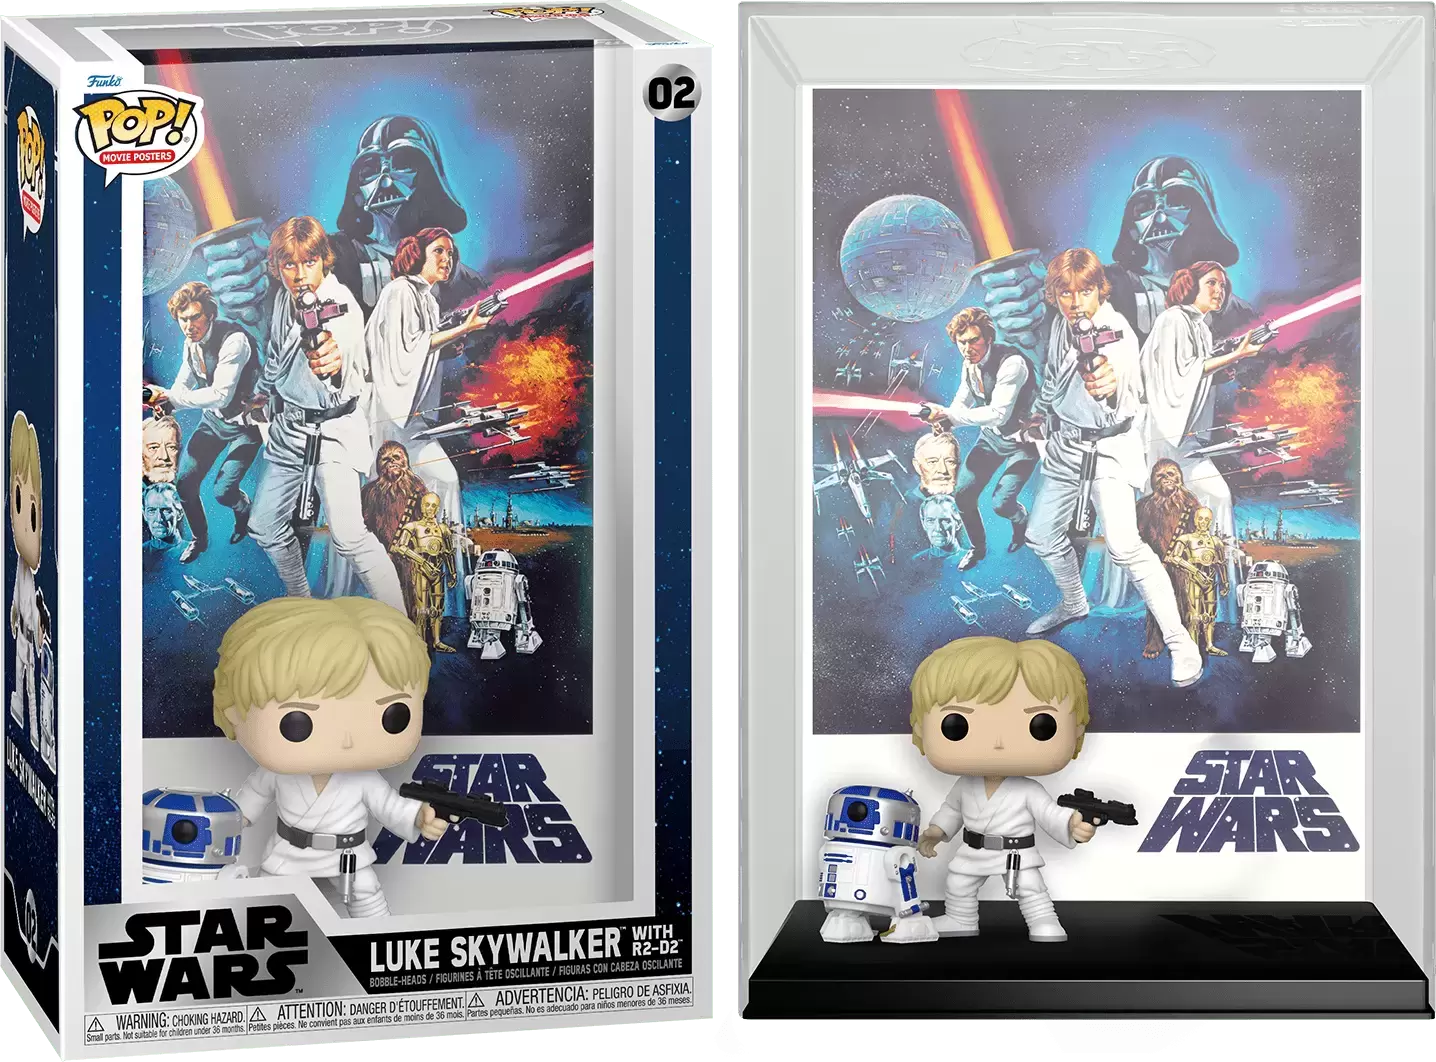 POP! Movie Posters - Star Wars - Luke Skywalker with R2-D2